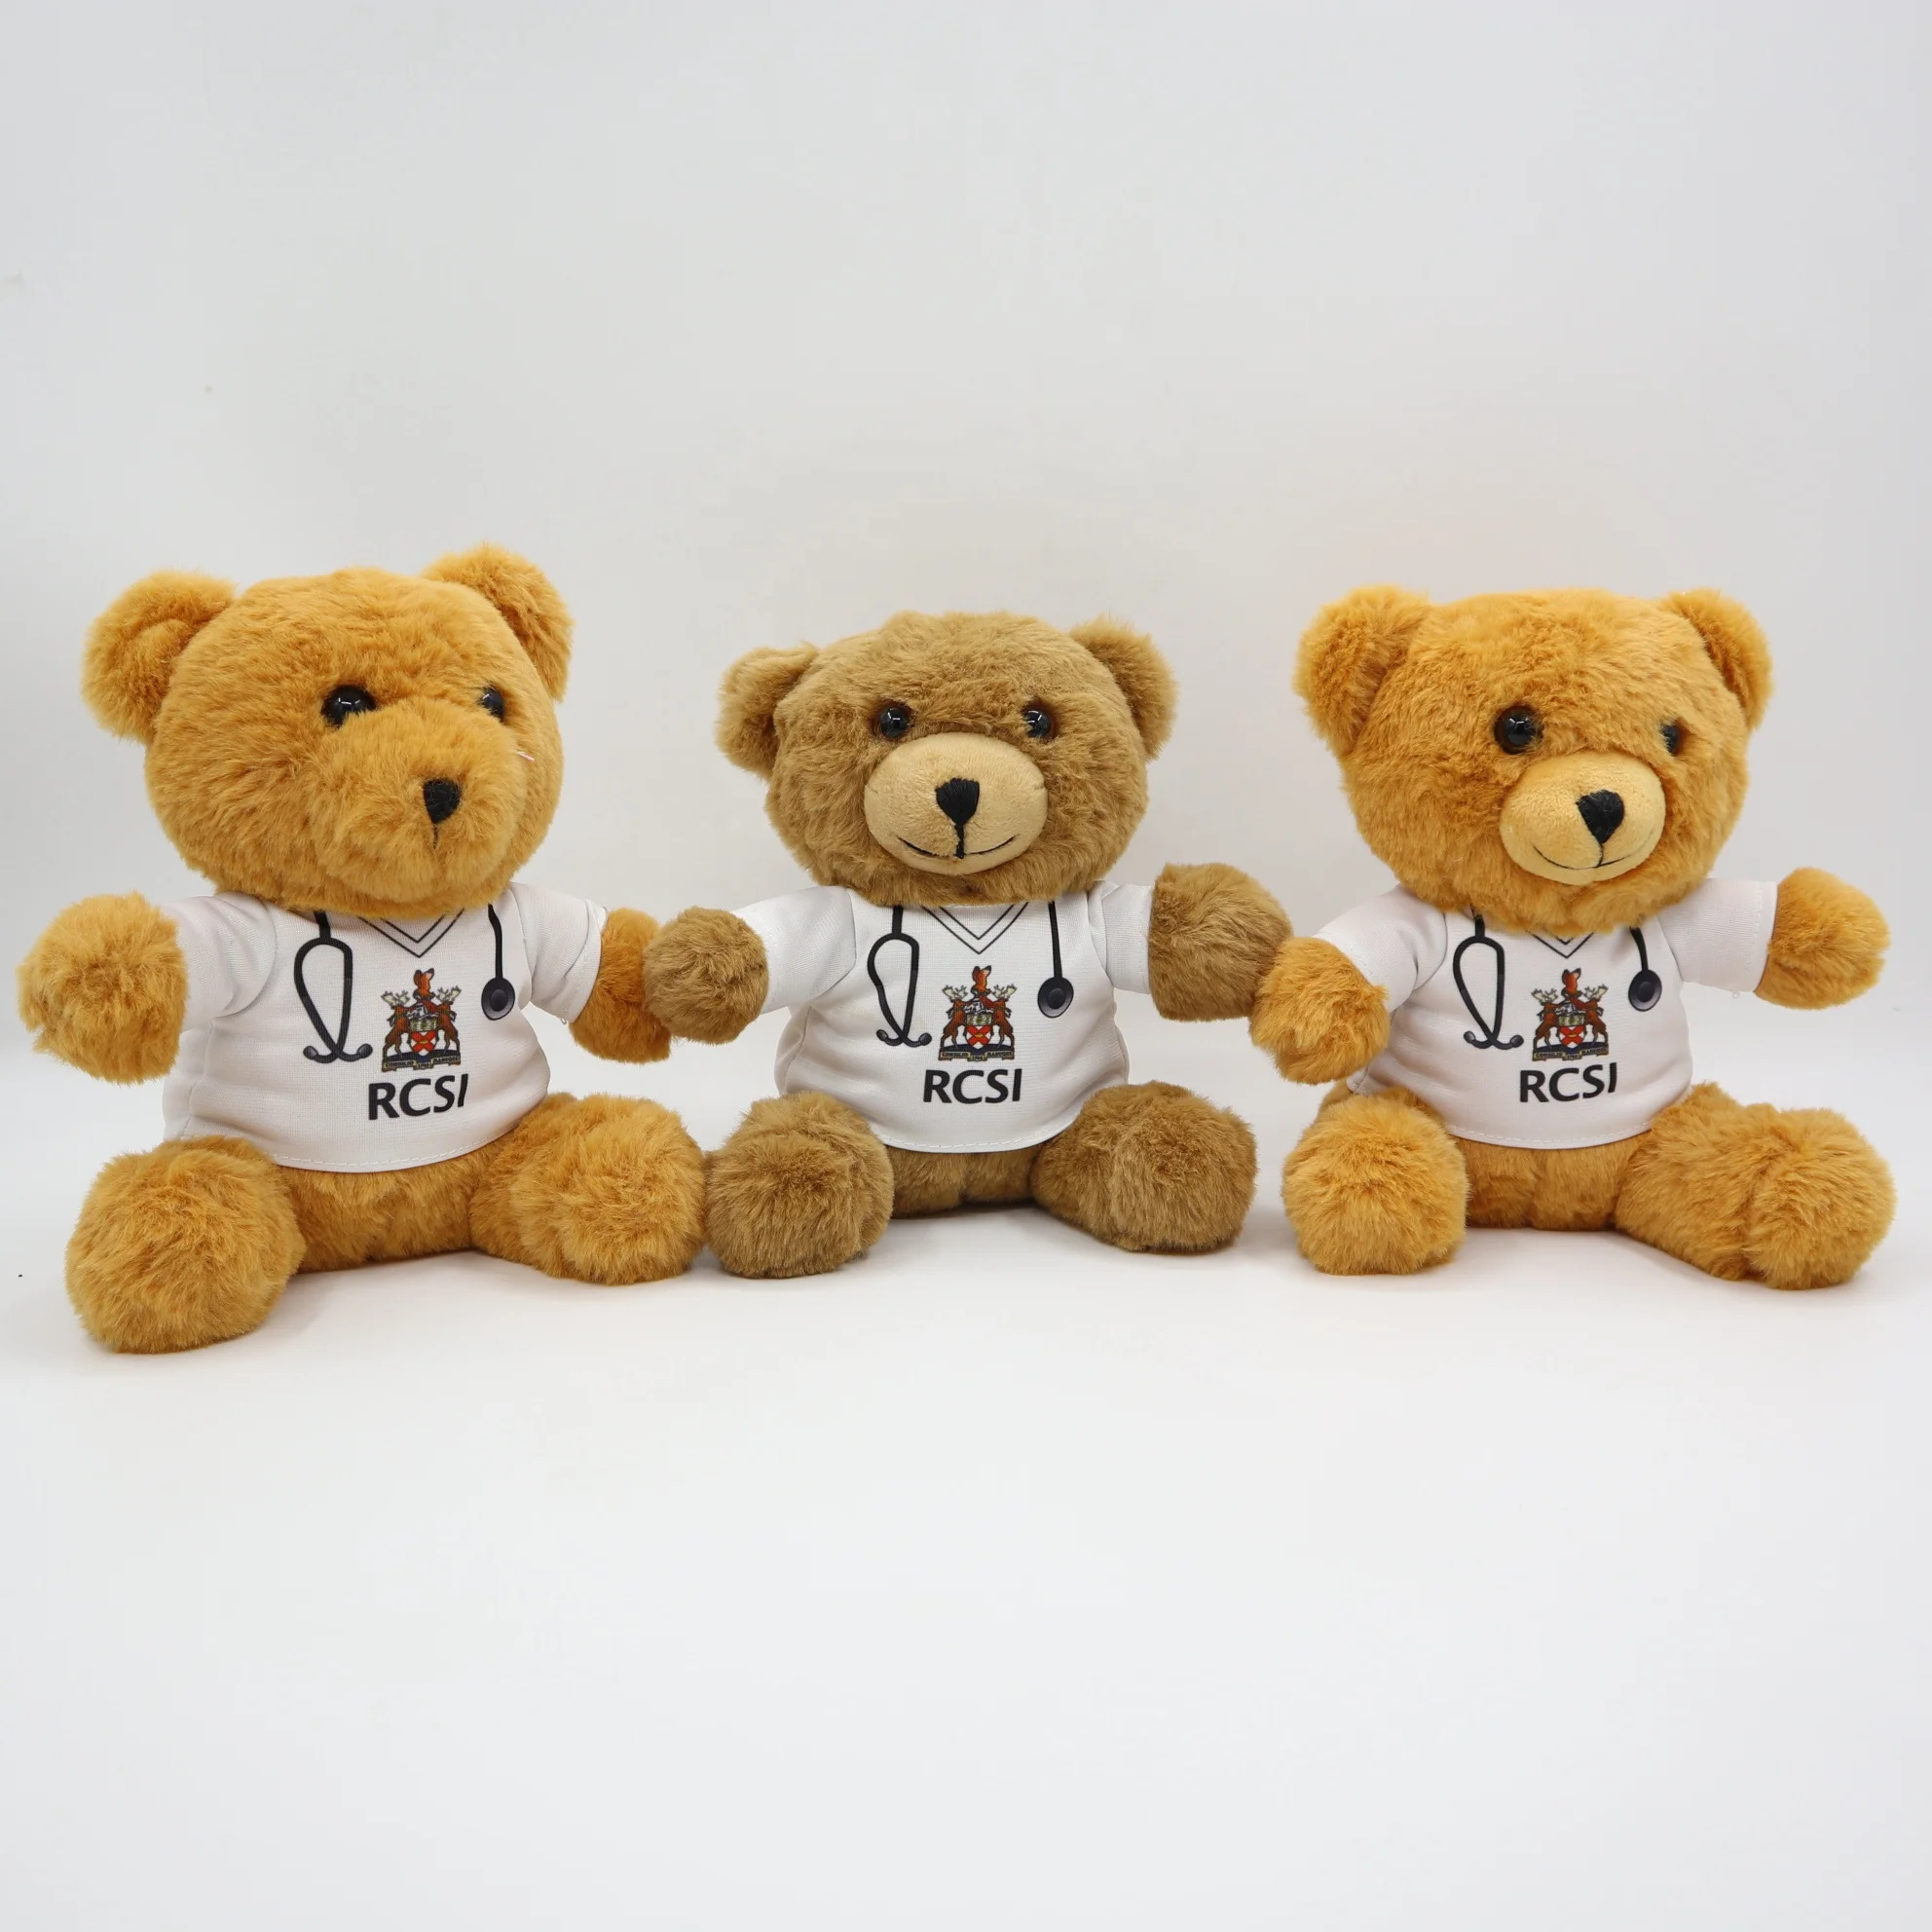 teddy bear in nurse uniform